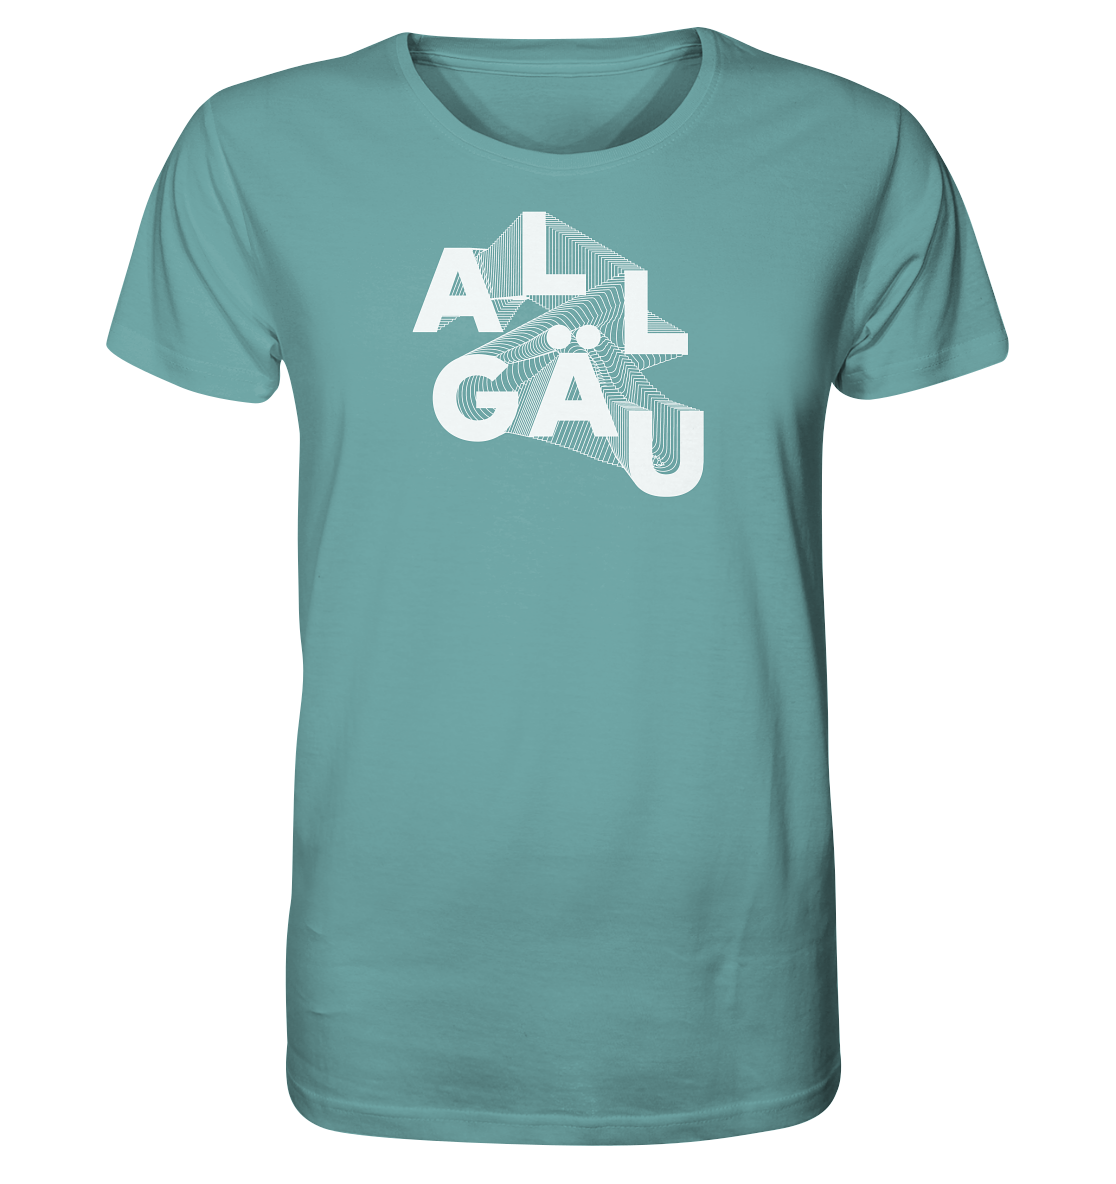 Allgäu Typo - Organic Shirt